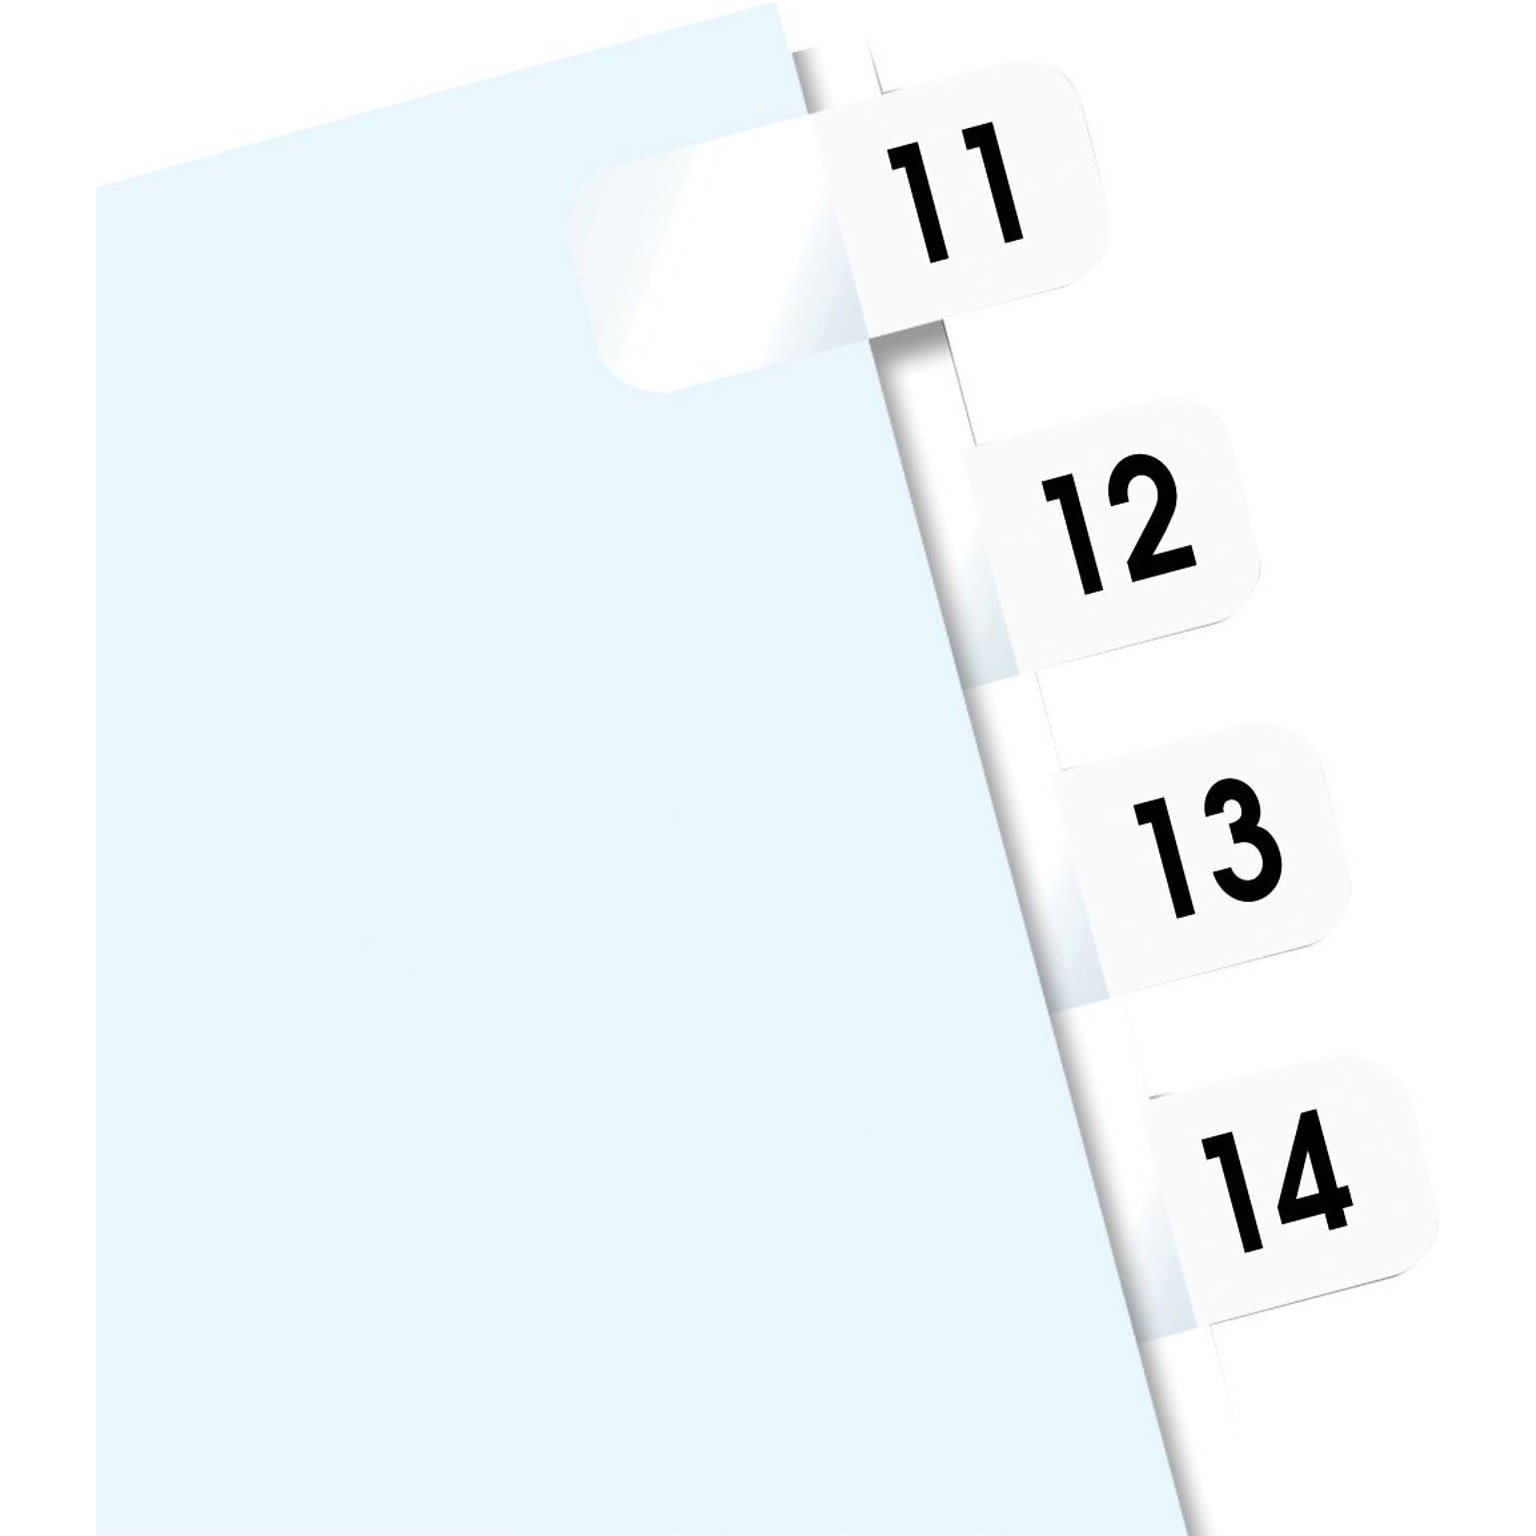 Redi-Tag® Self-Stick Index Tabs, 11-20, White, 7/16 x 1, 104 Tabs per Pack (31002)